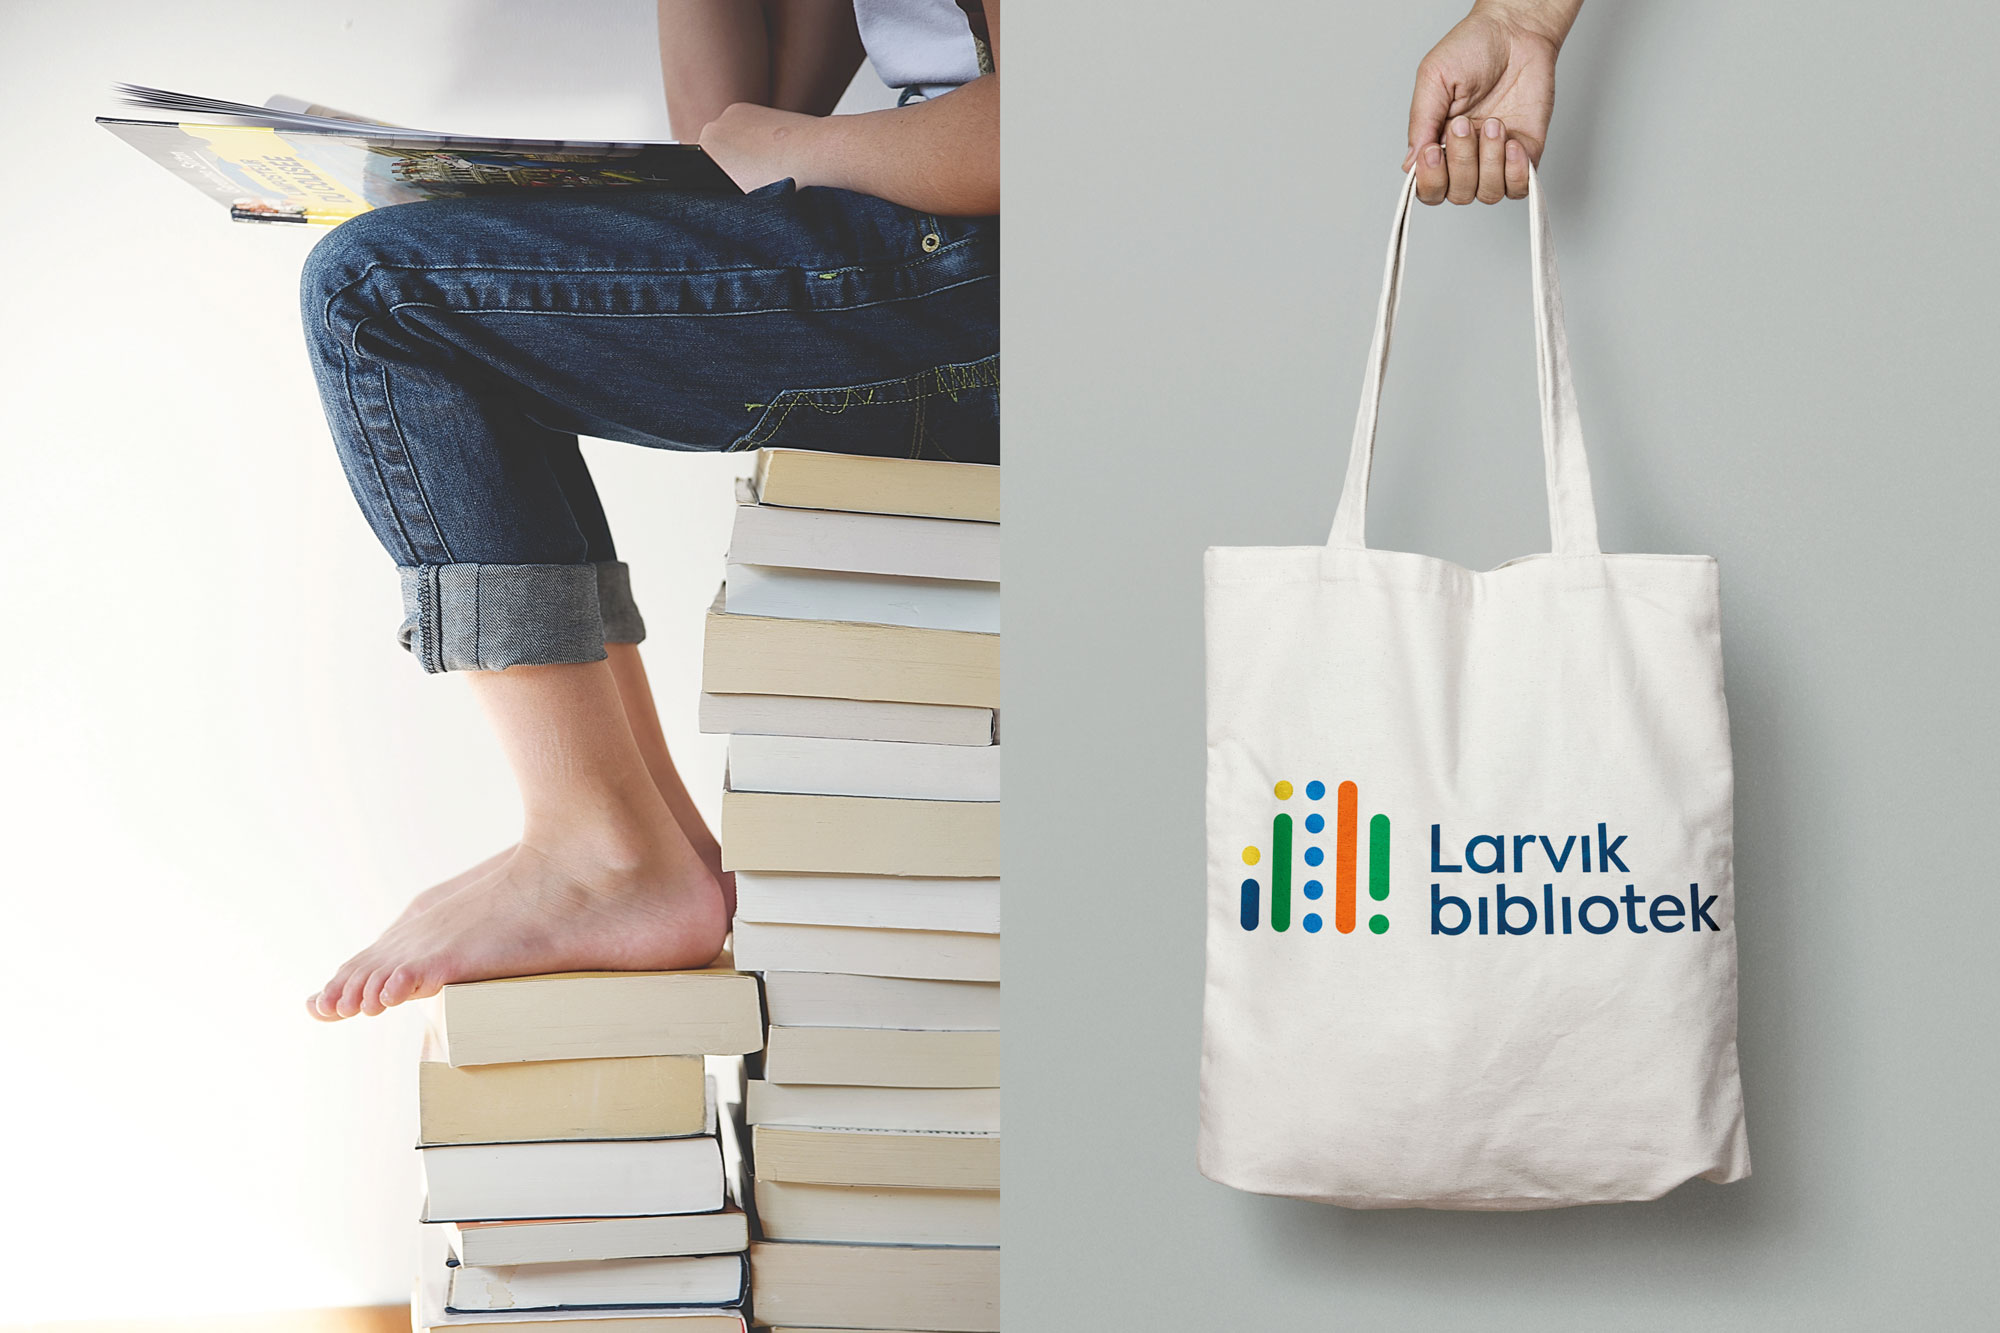 Affair har designet ny logo og grafisk profil for Larvik bibliotek